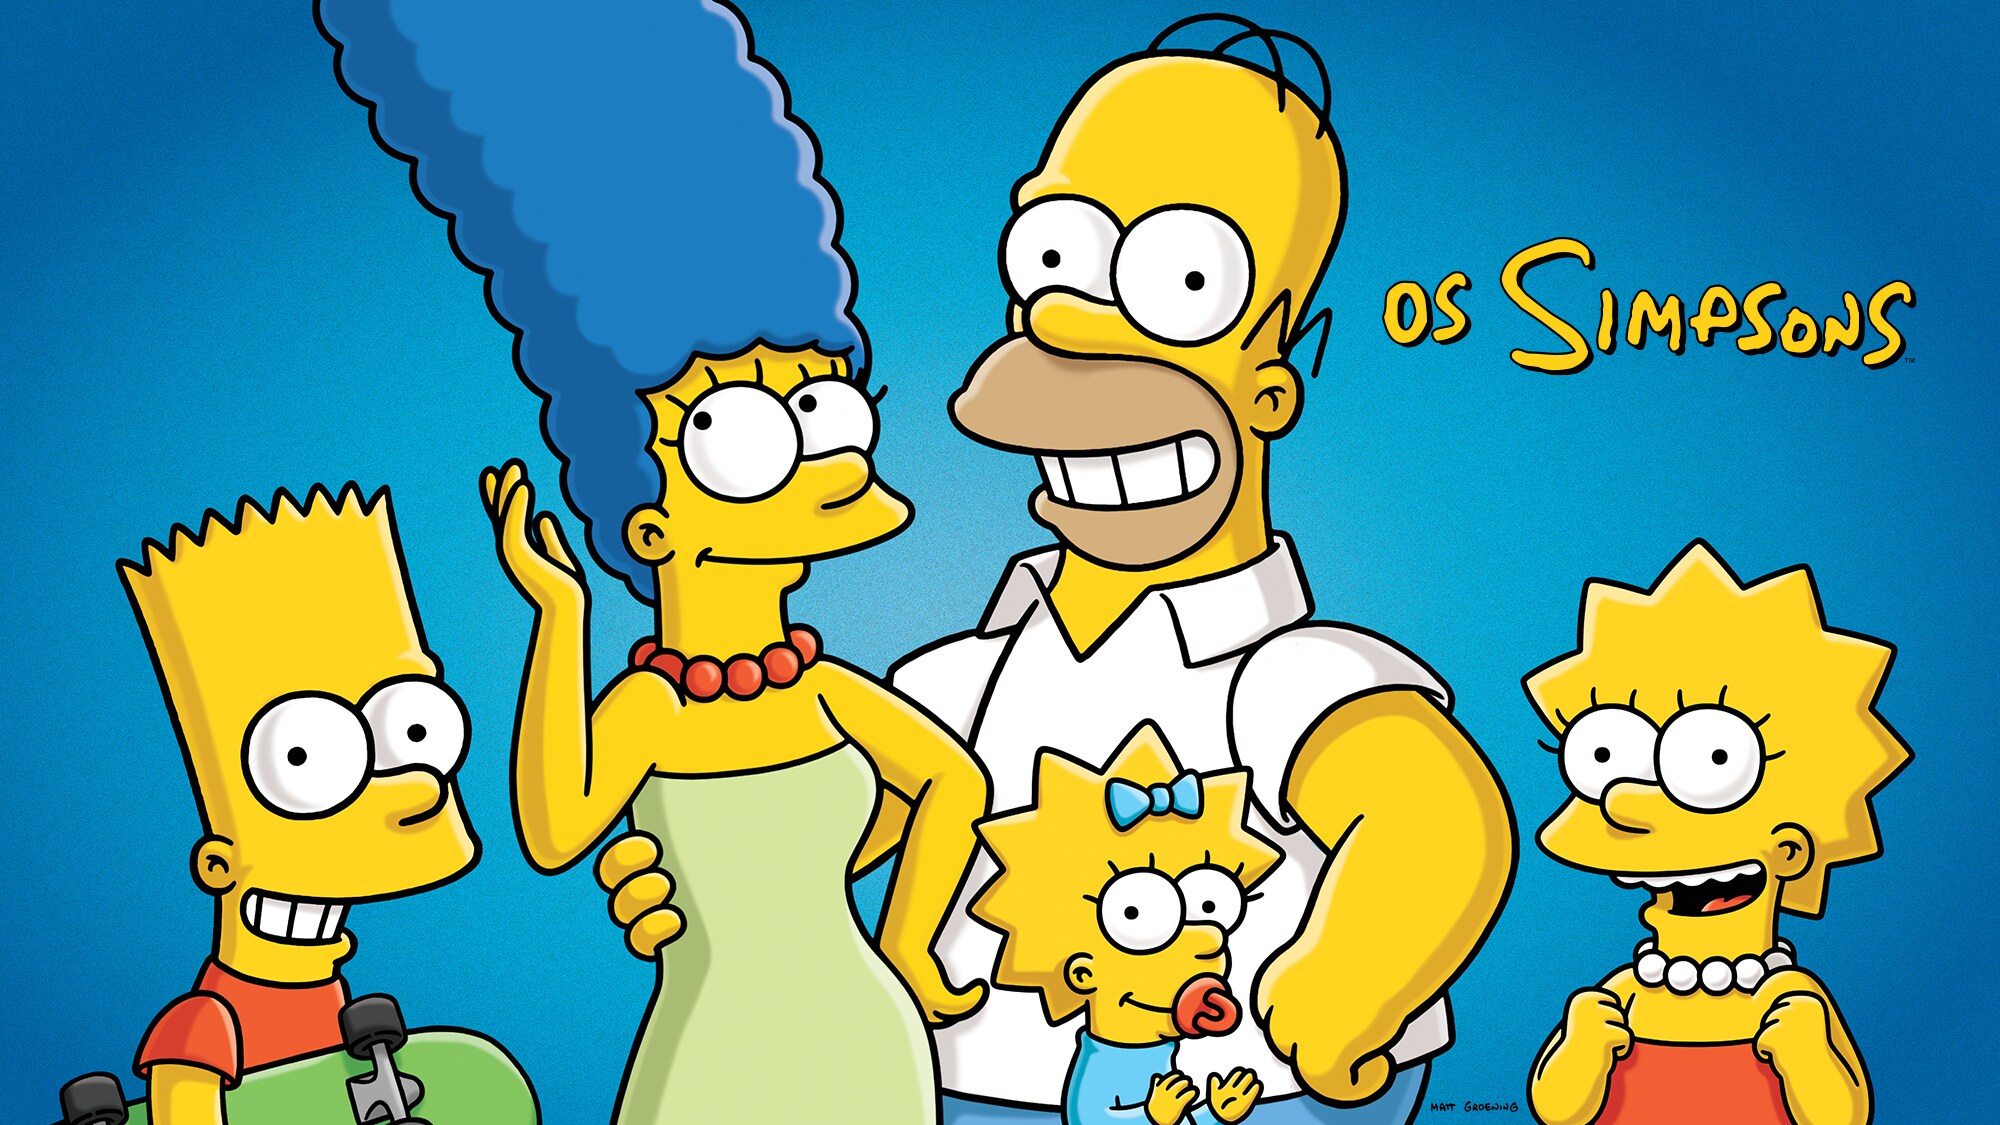 Páscoa no Star+: Simpsons